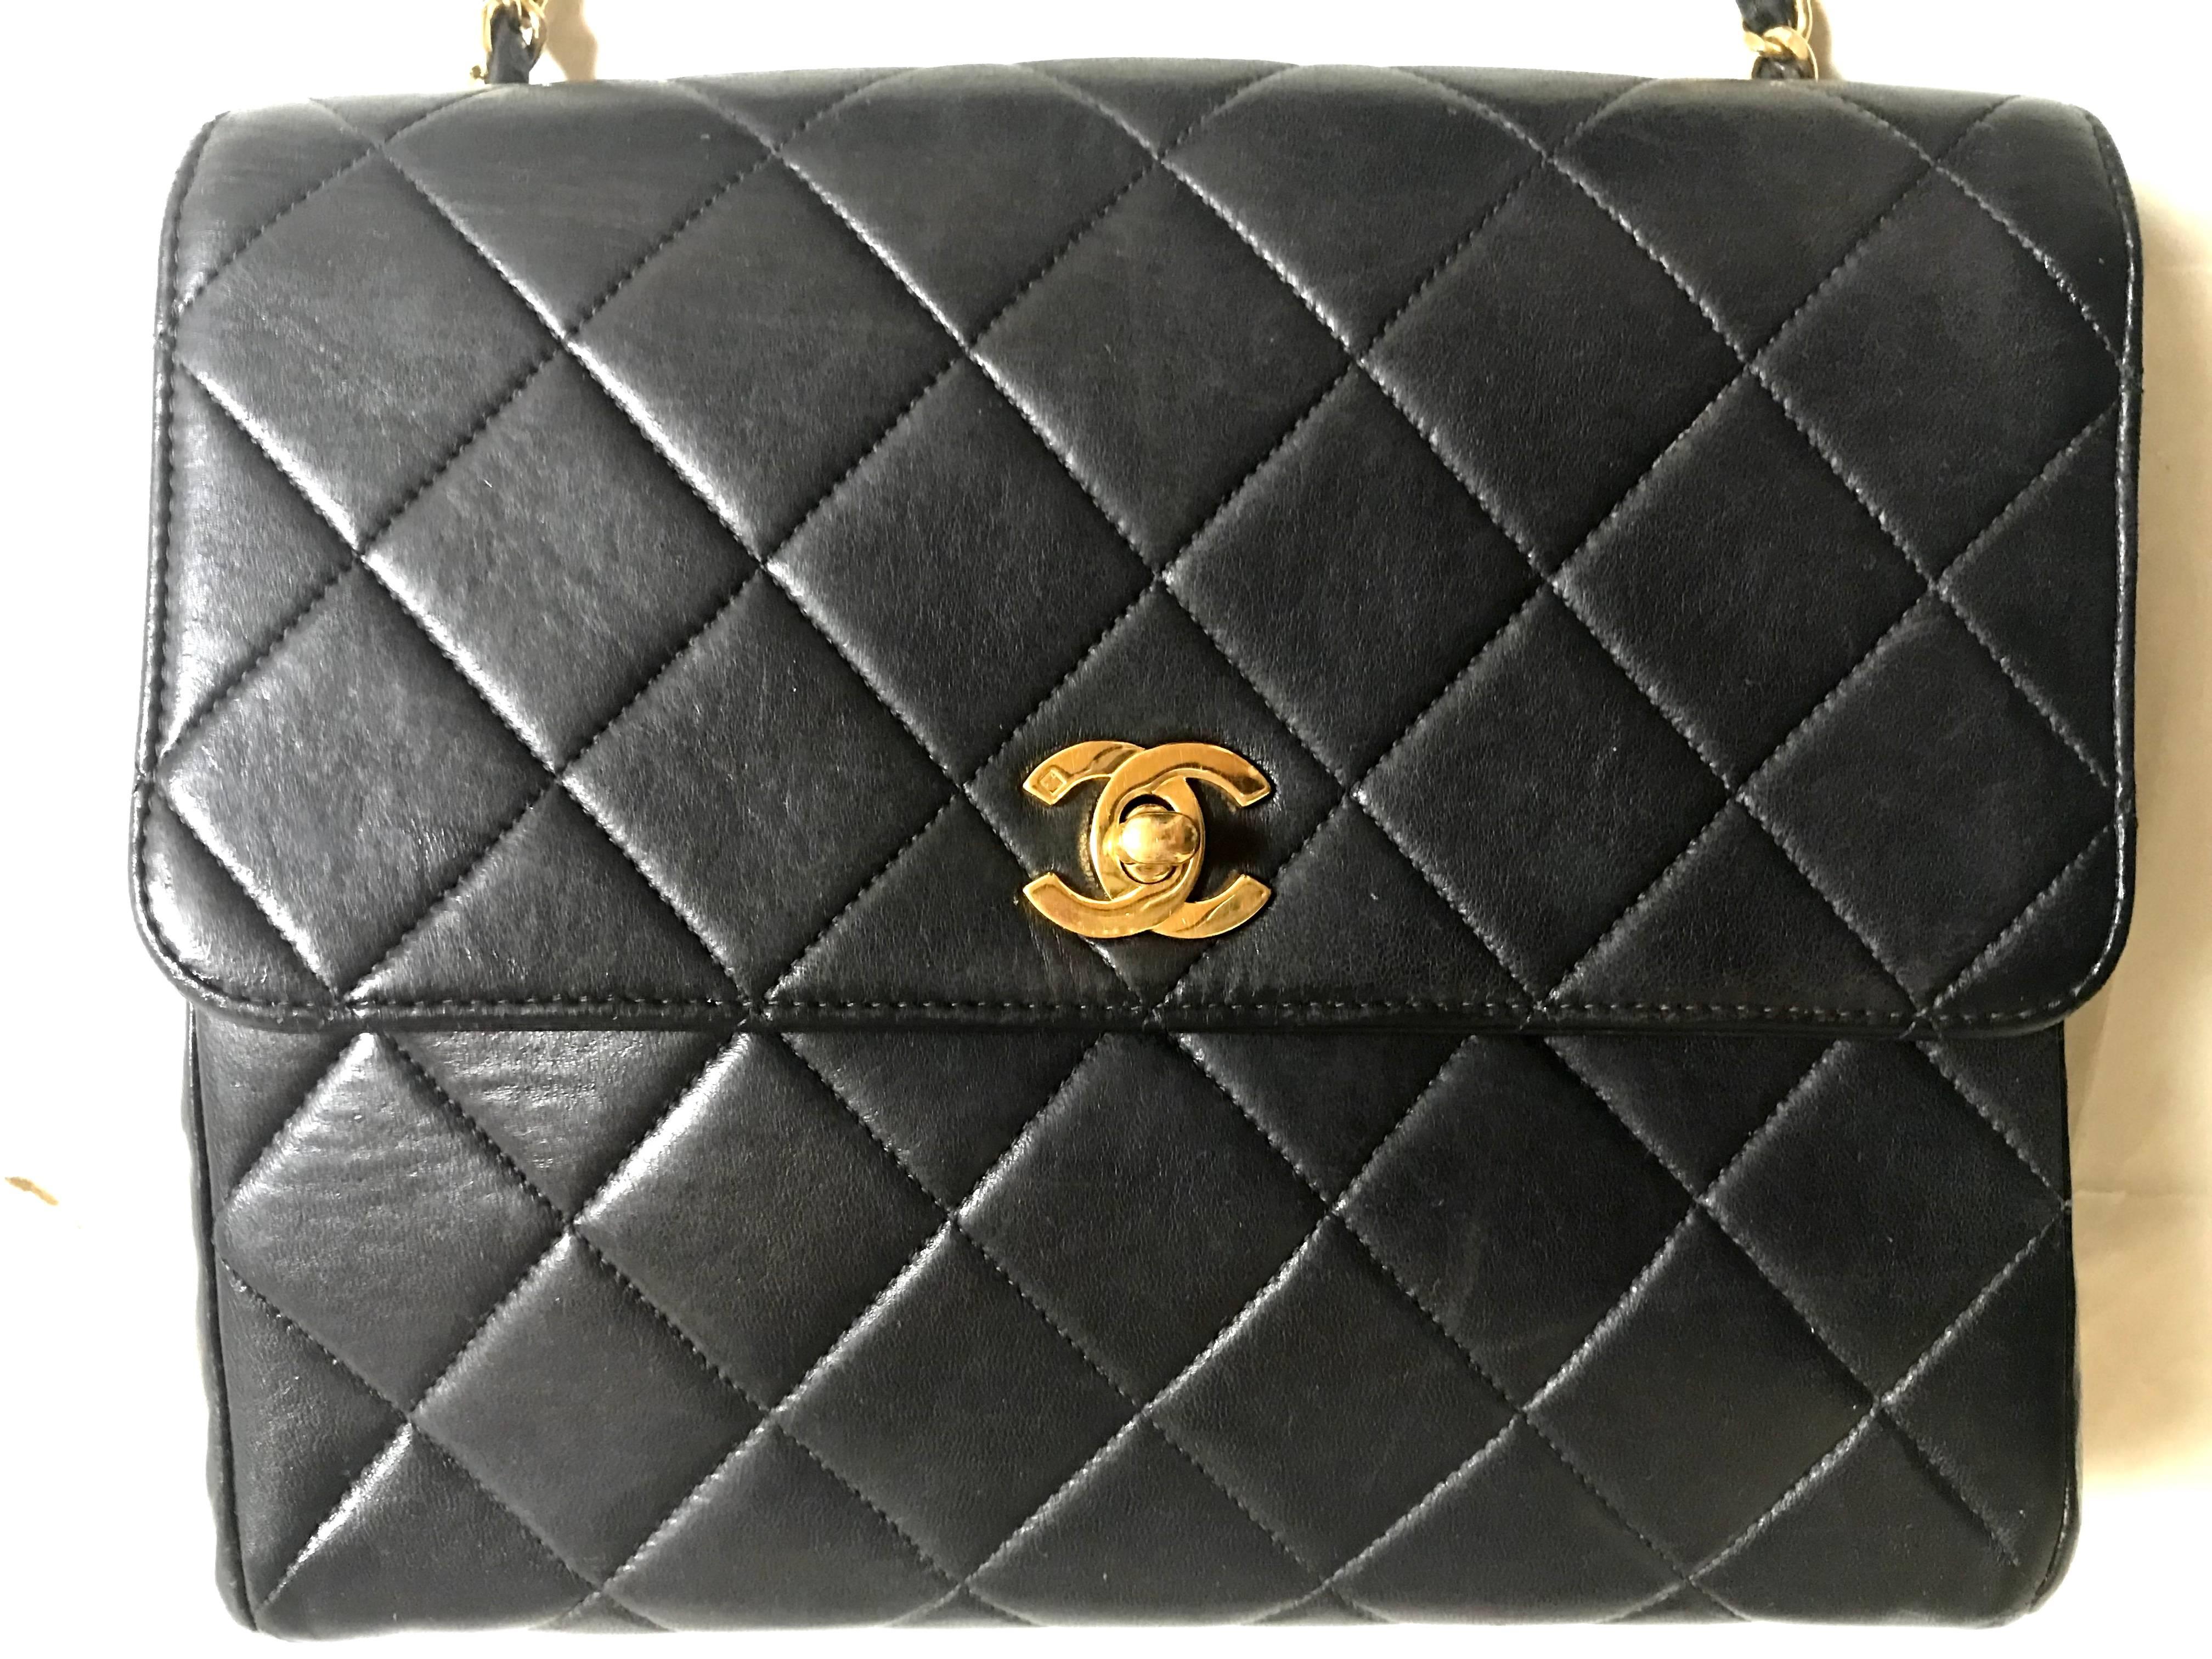 Vintage CHANEL black lamb leather 2.55 classic square shape shoulder bag with cc 4